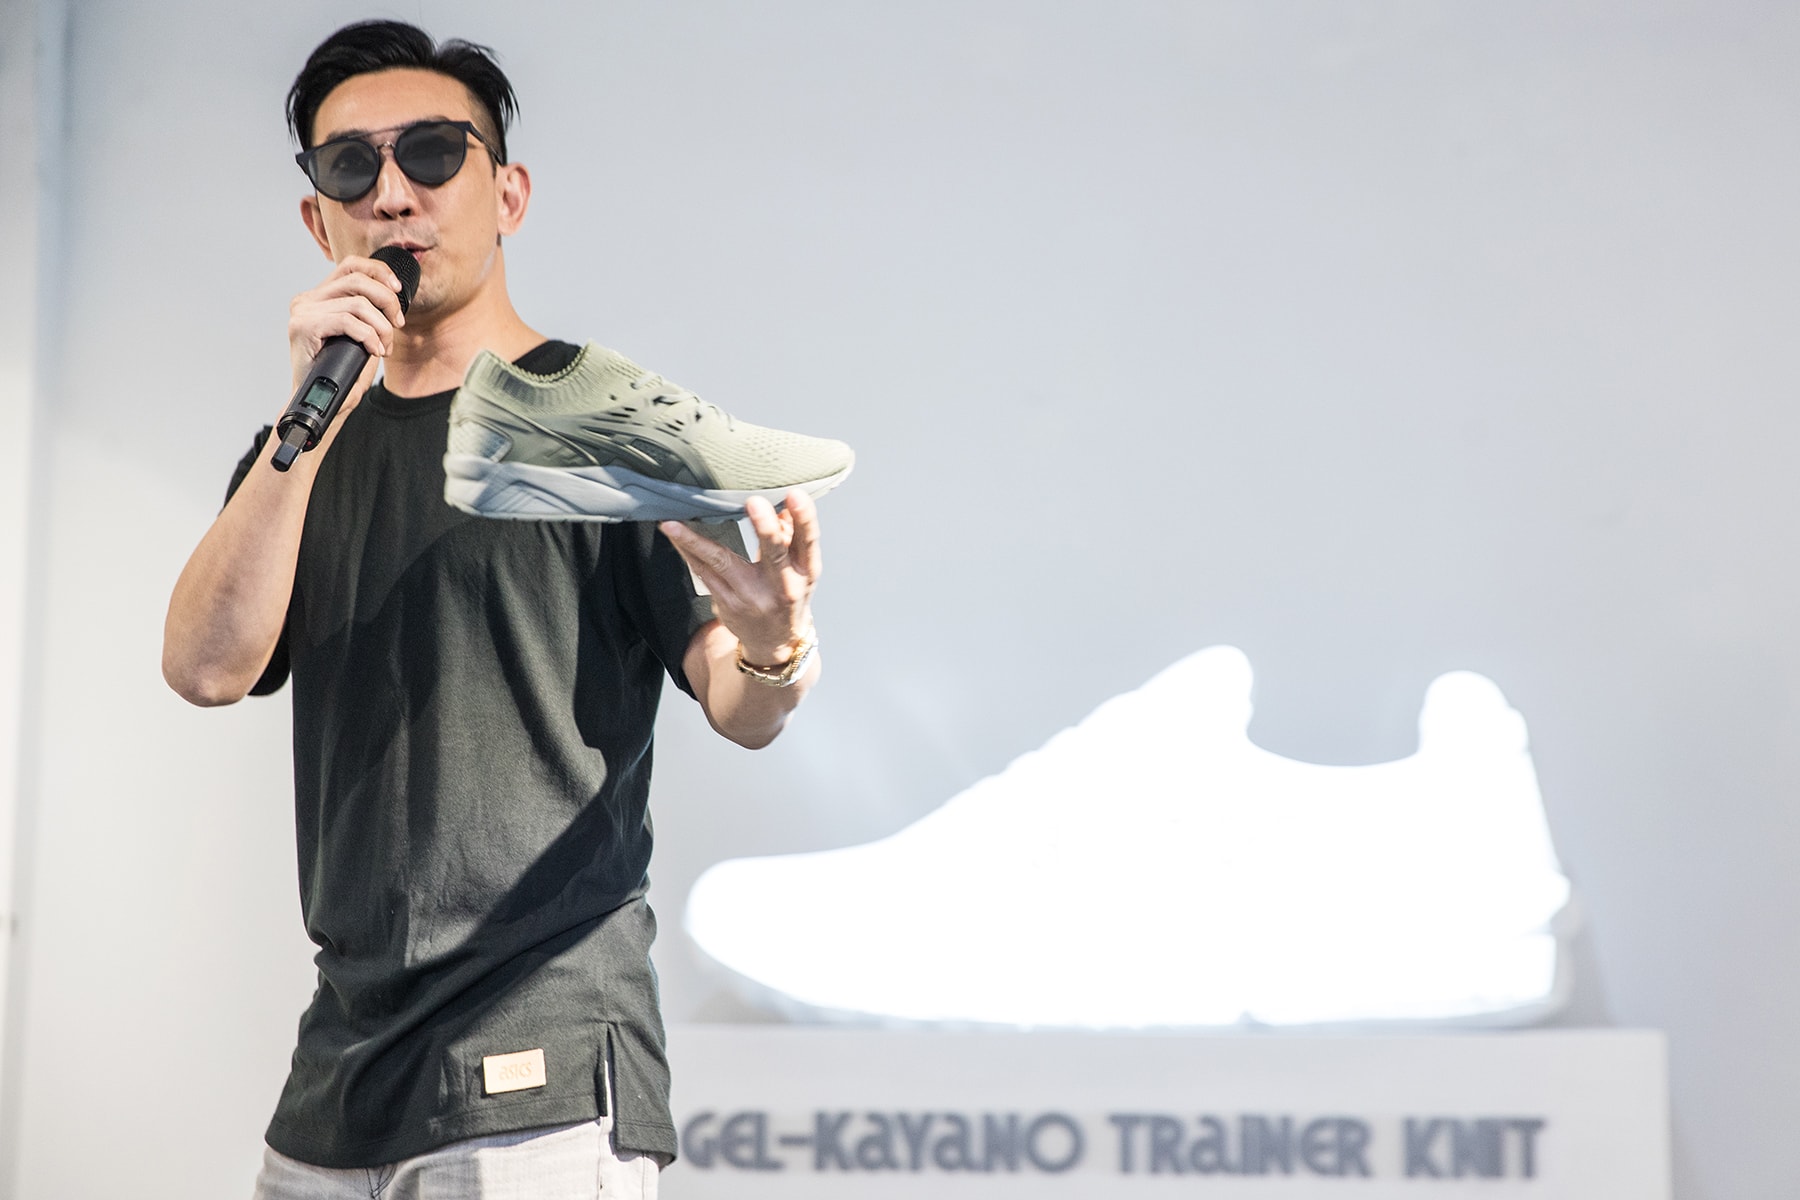 ASICS Tiger GEL-Kayano Trainer Knit Shanghai Launch Recap